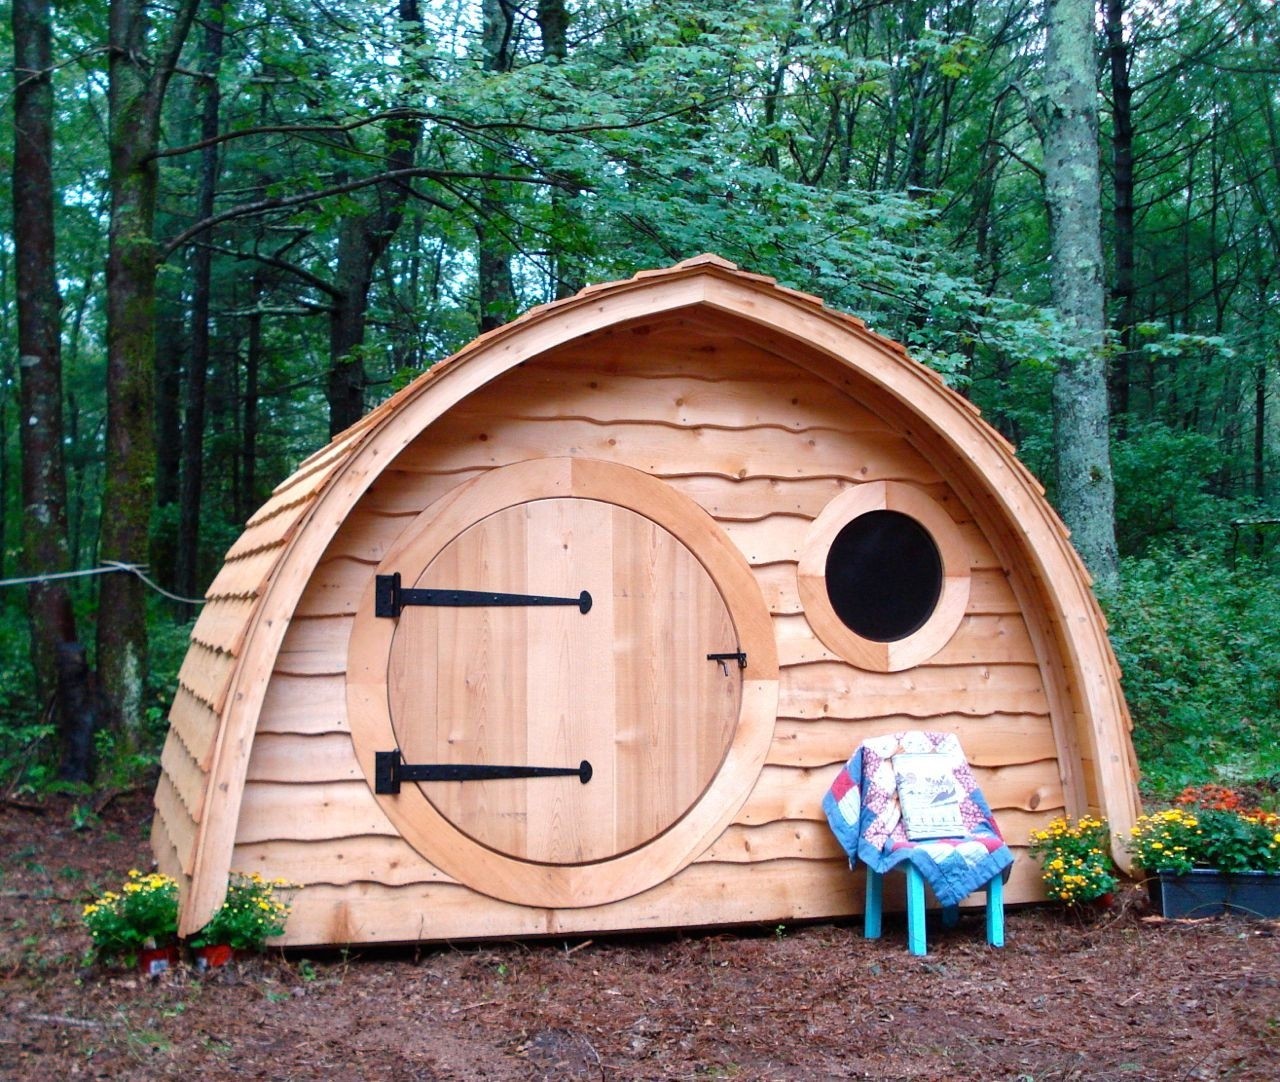 Hobbit hole playhouse kit outdoor wooden kids playhouse 1